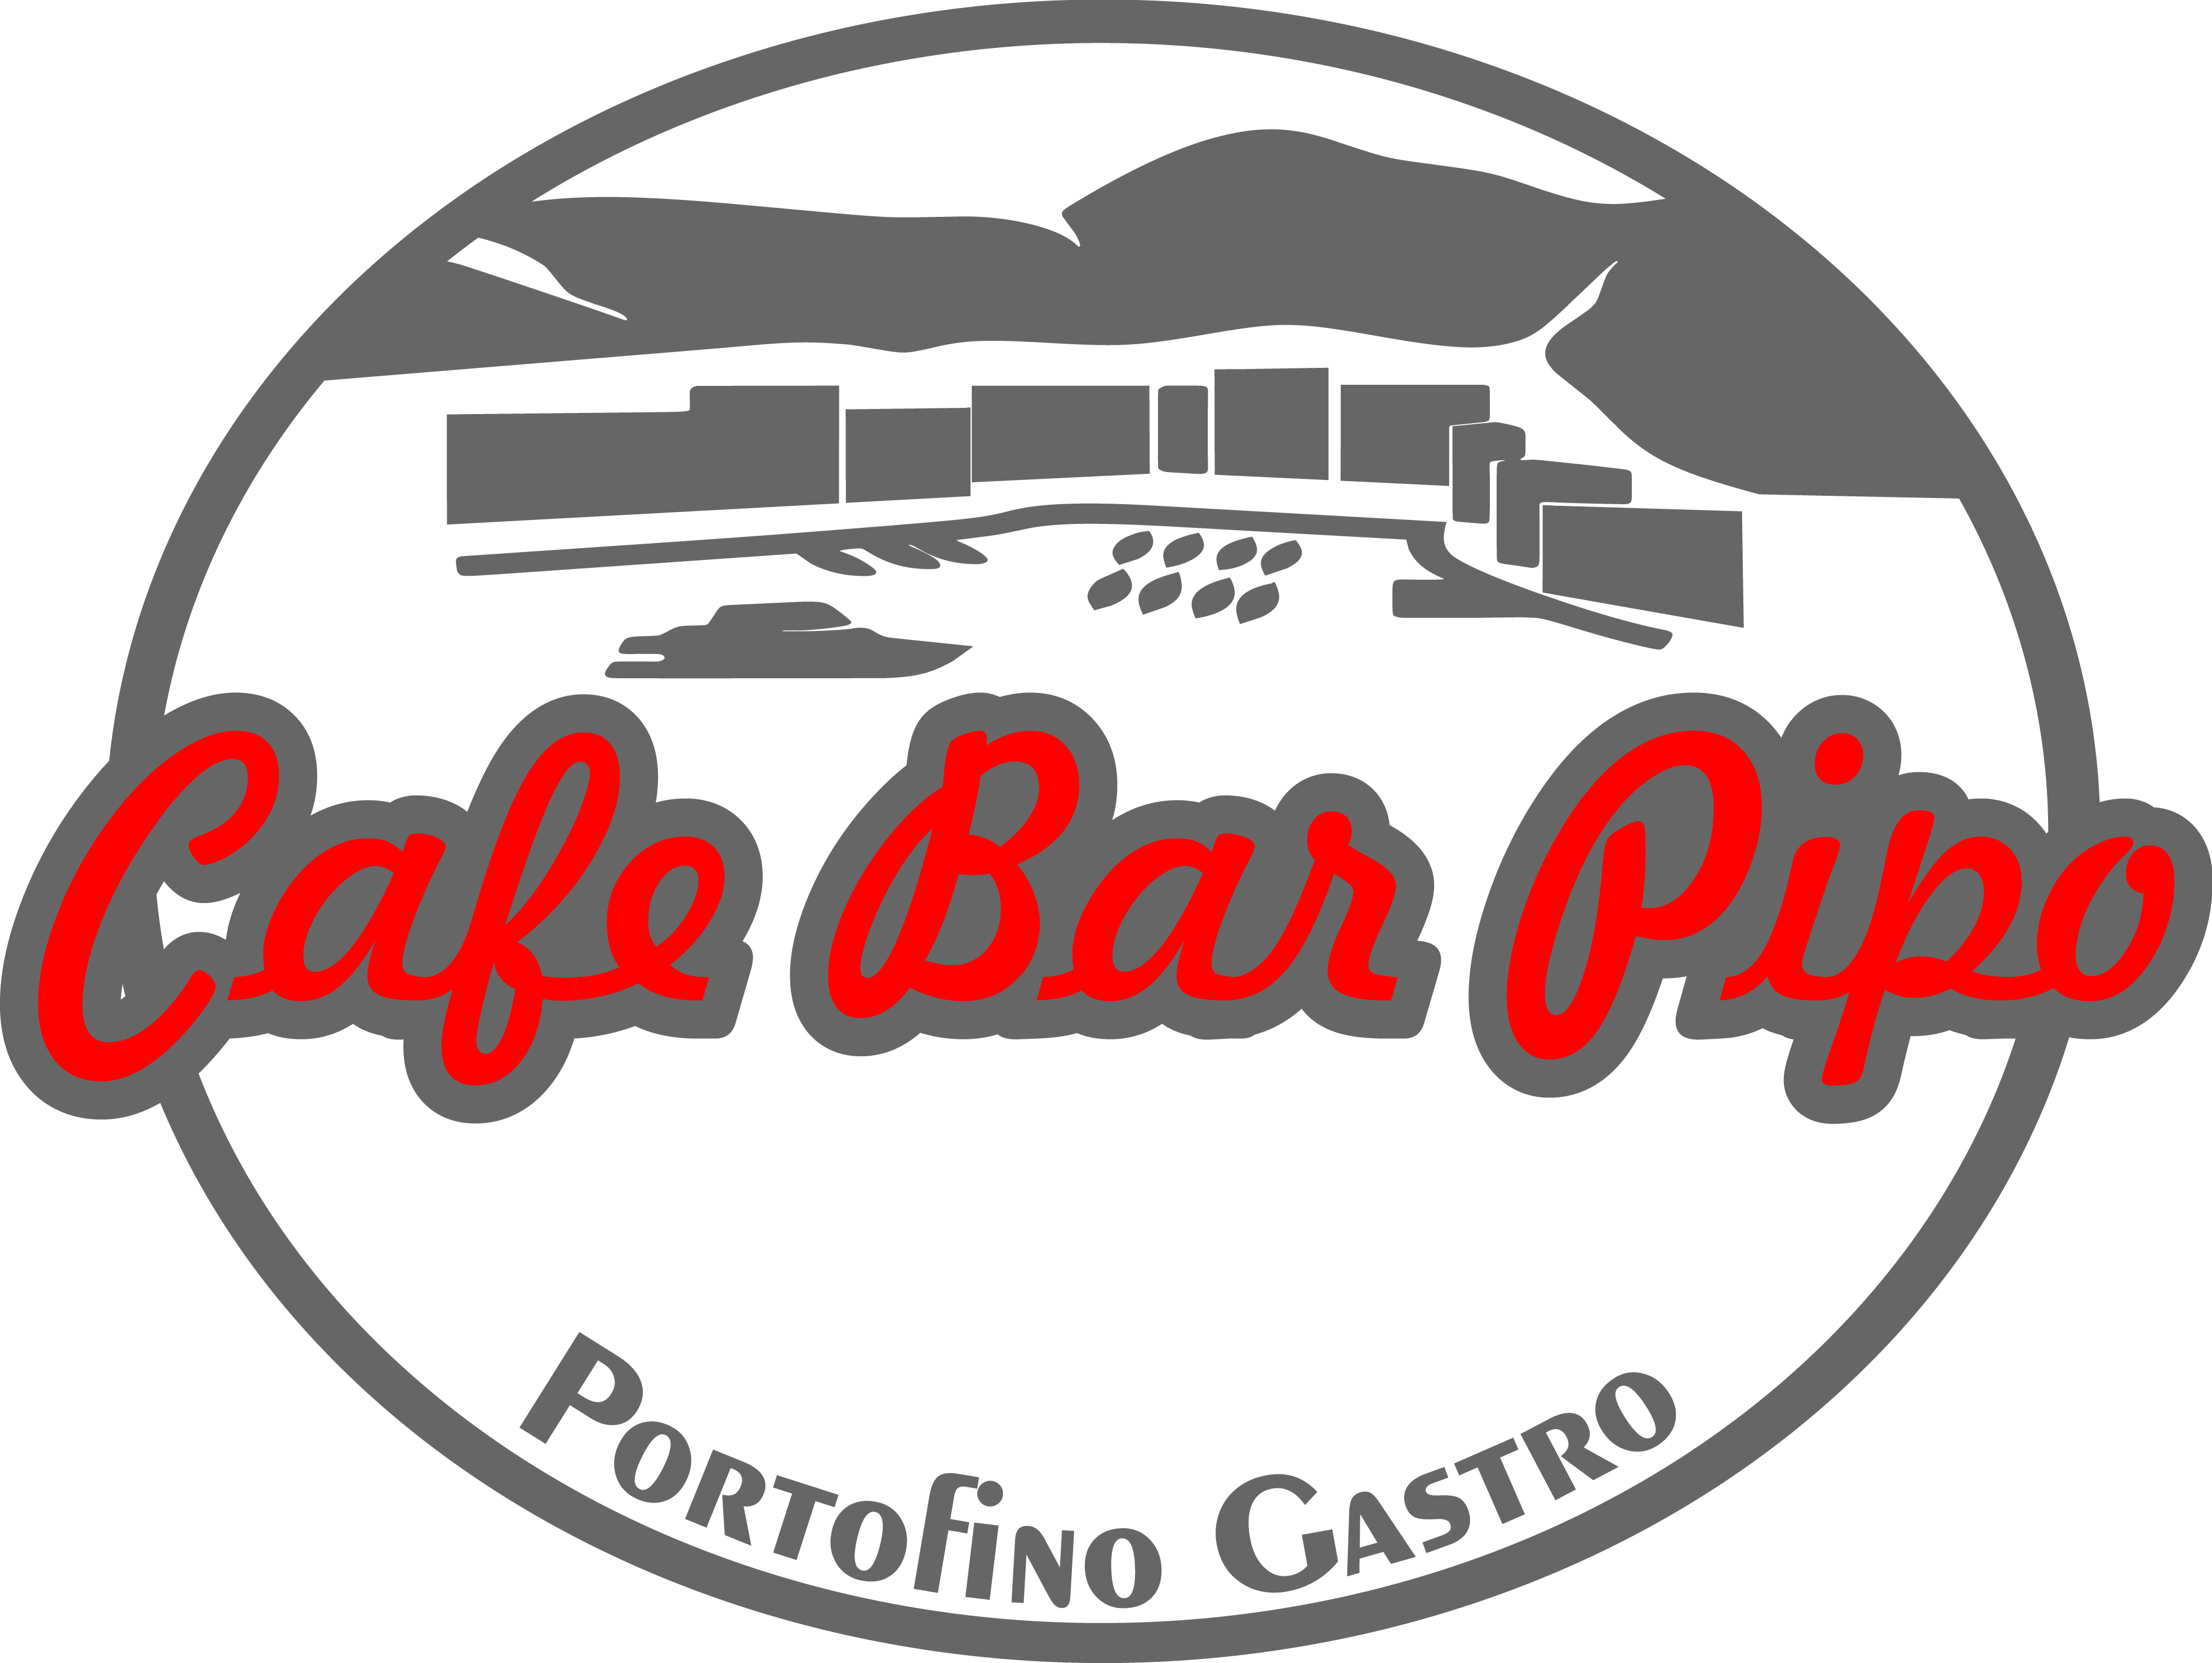 Portfino Gastro GmbH